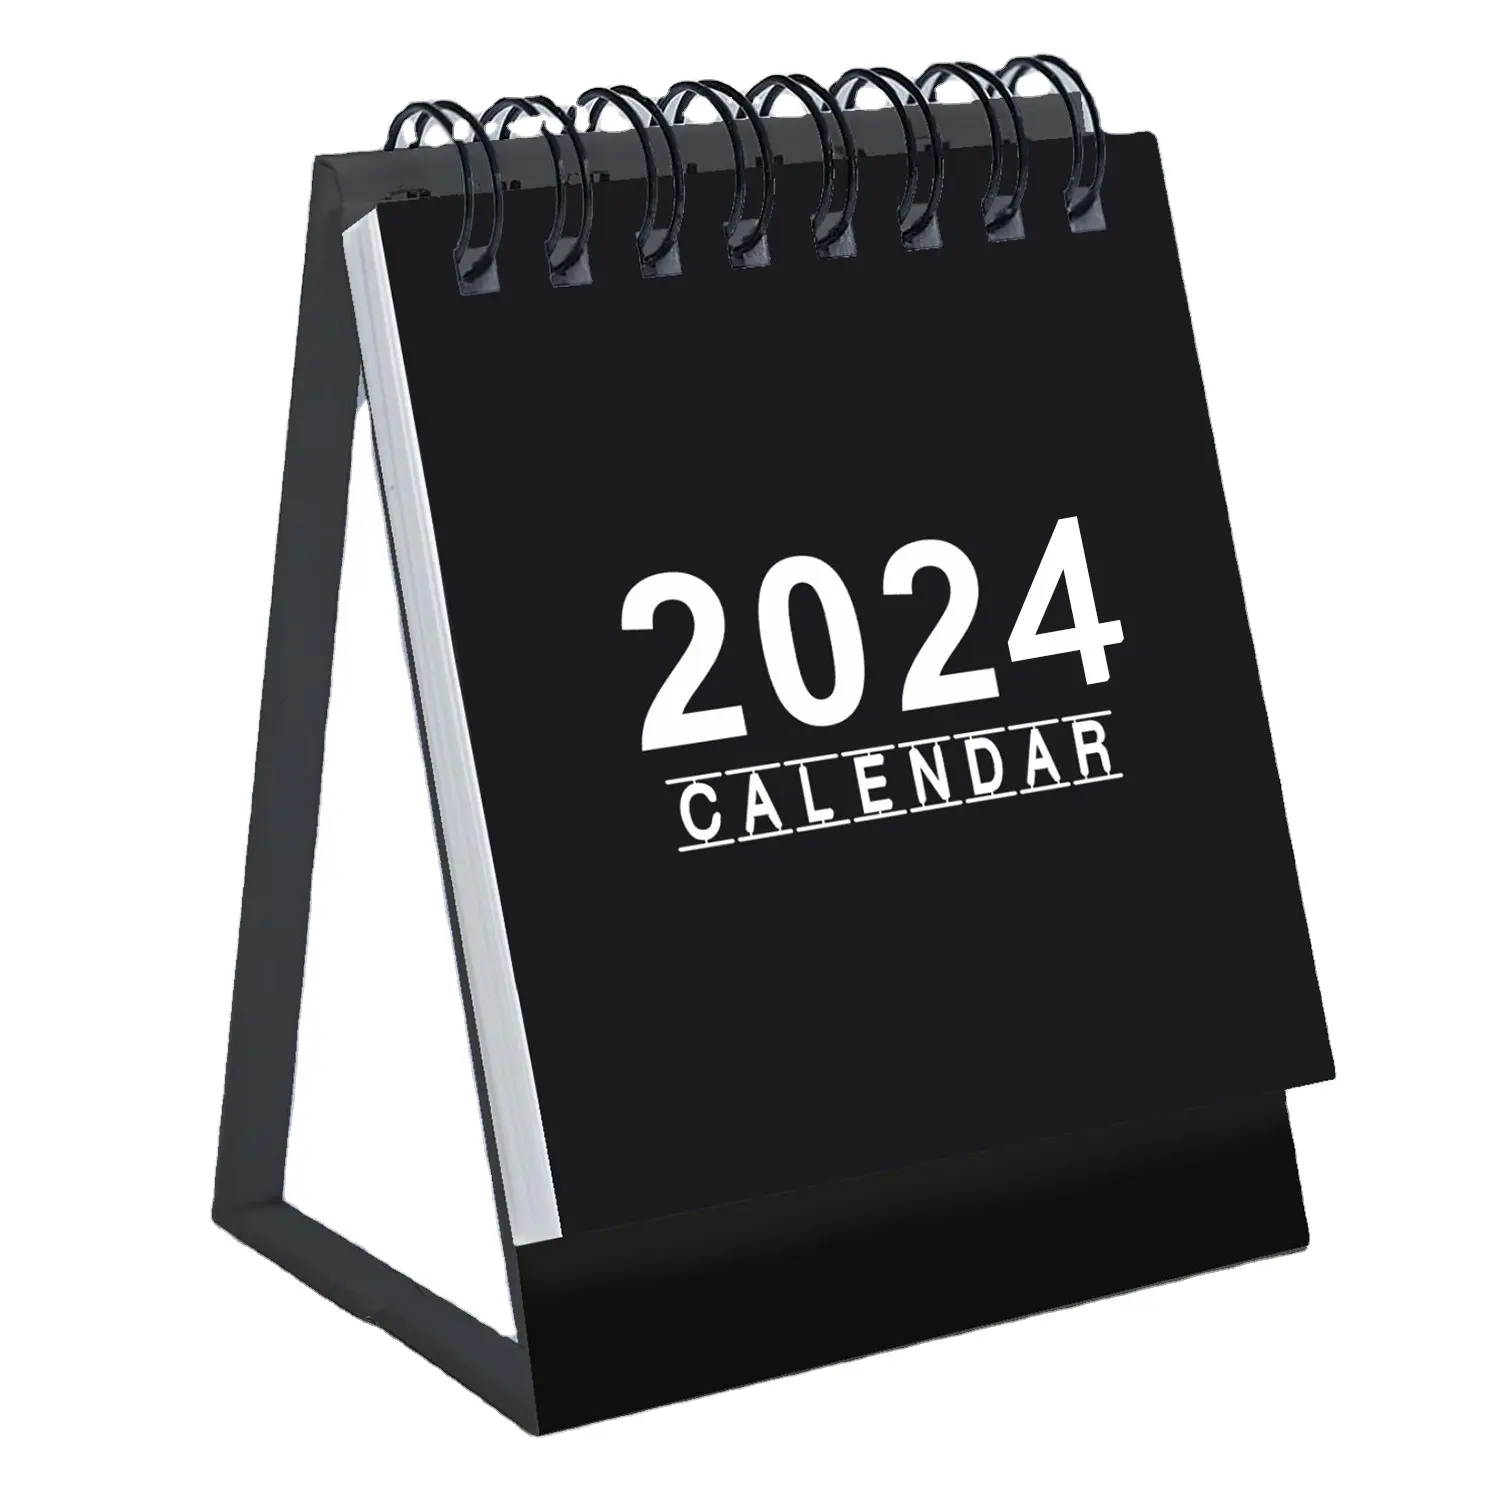 Caliente nuevo 2024 mini Calendario de escritorio en inglés calendario simple creativo decoración de escritorio de oficina calendario portátil